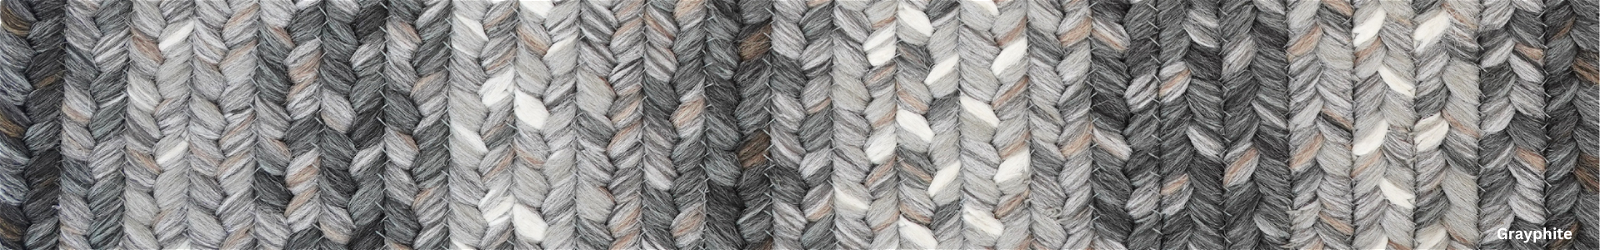 10 x 10 - Jute - Grey Braided Rugs